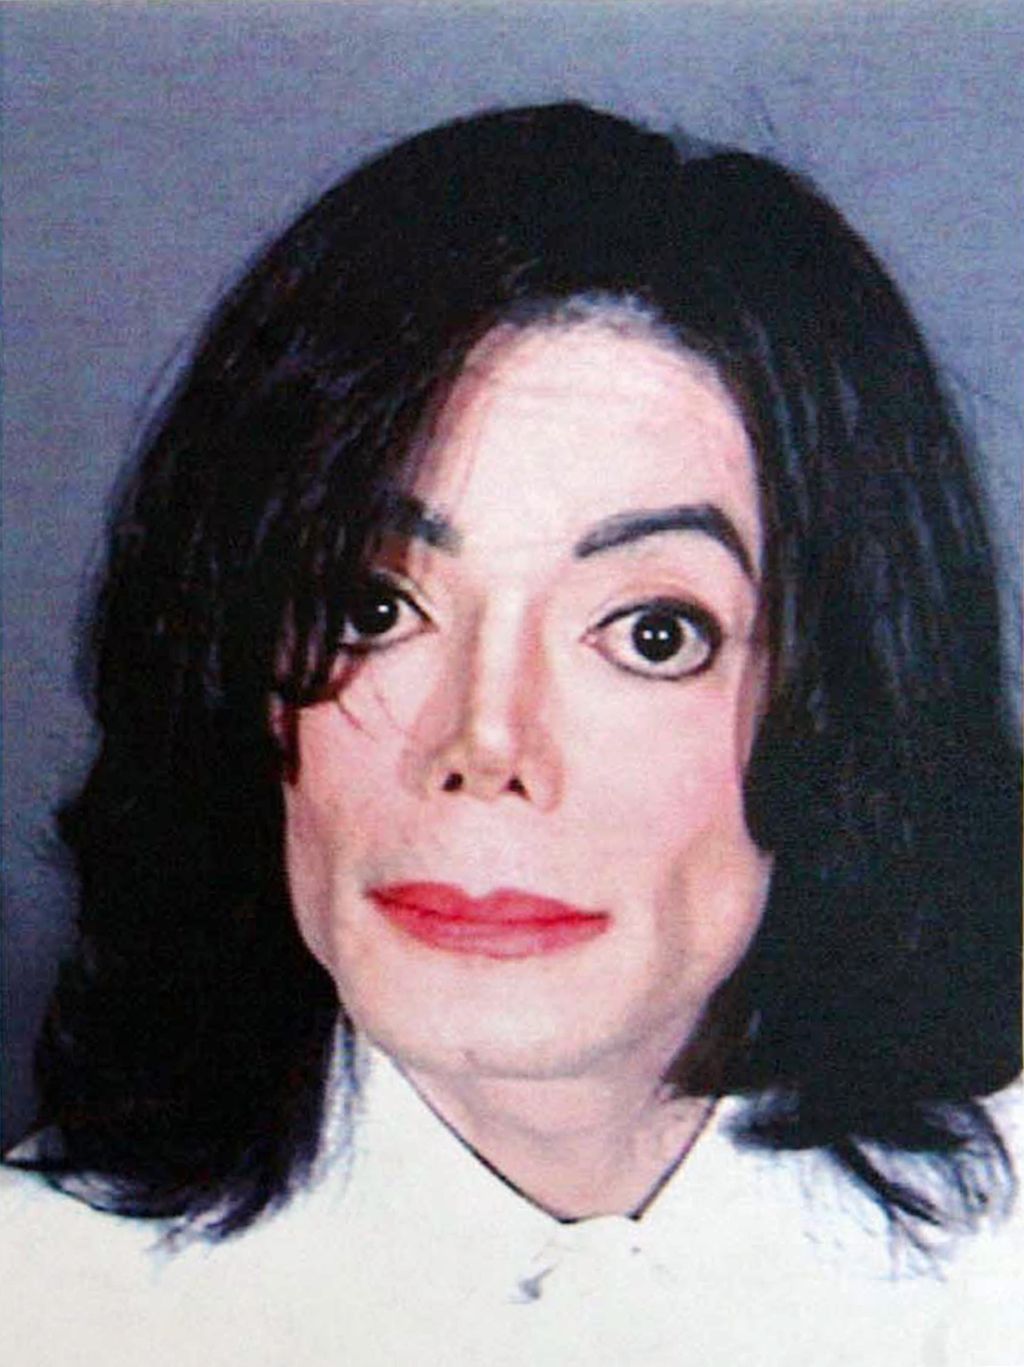 Michael Jackson Surrenders